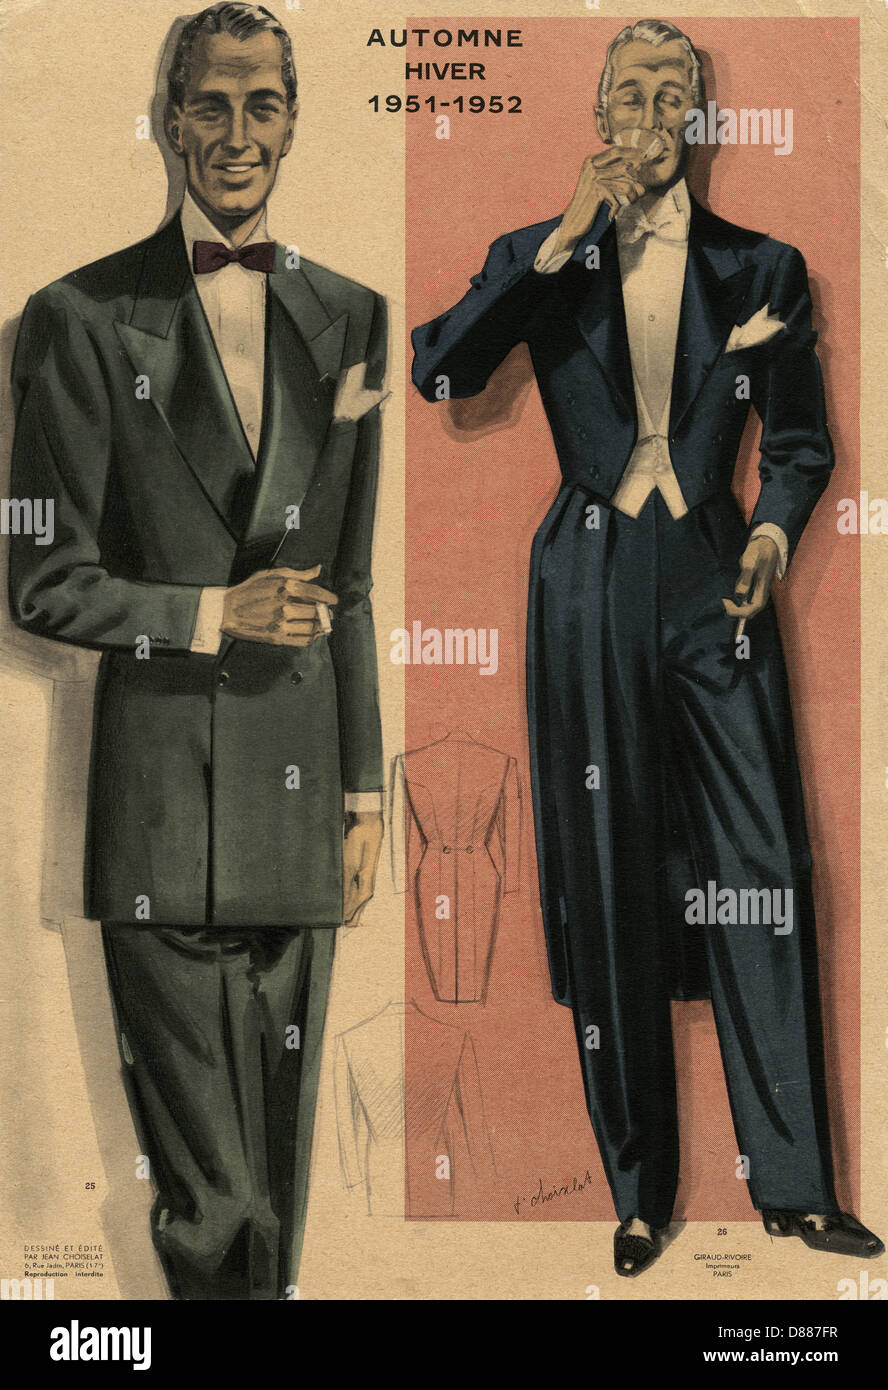 Eveing Dress Men 1951 52 Stock Photo